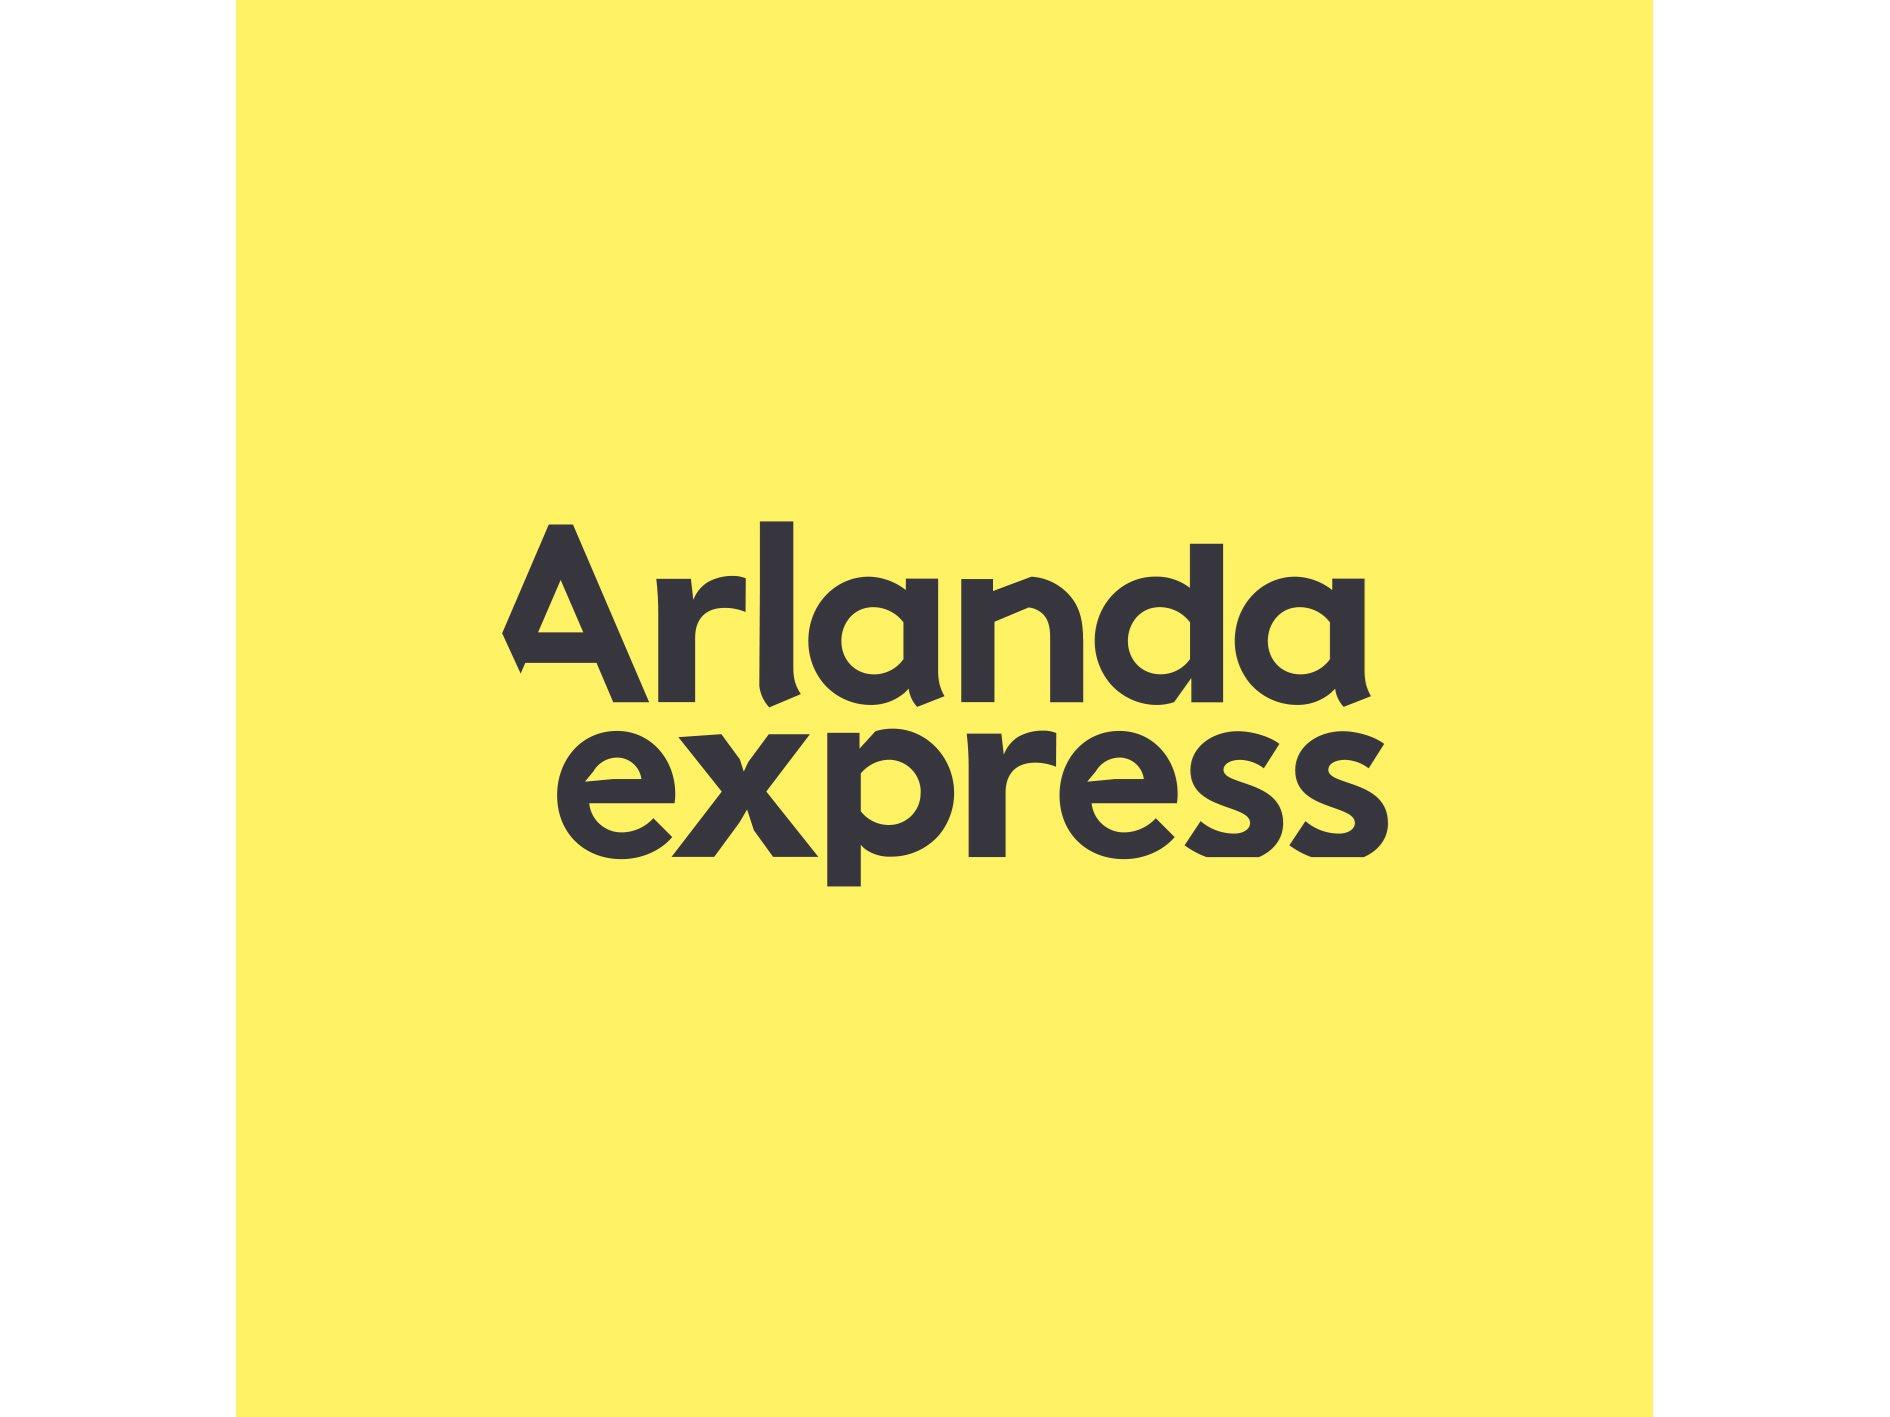 Logo of Arlanda express